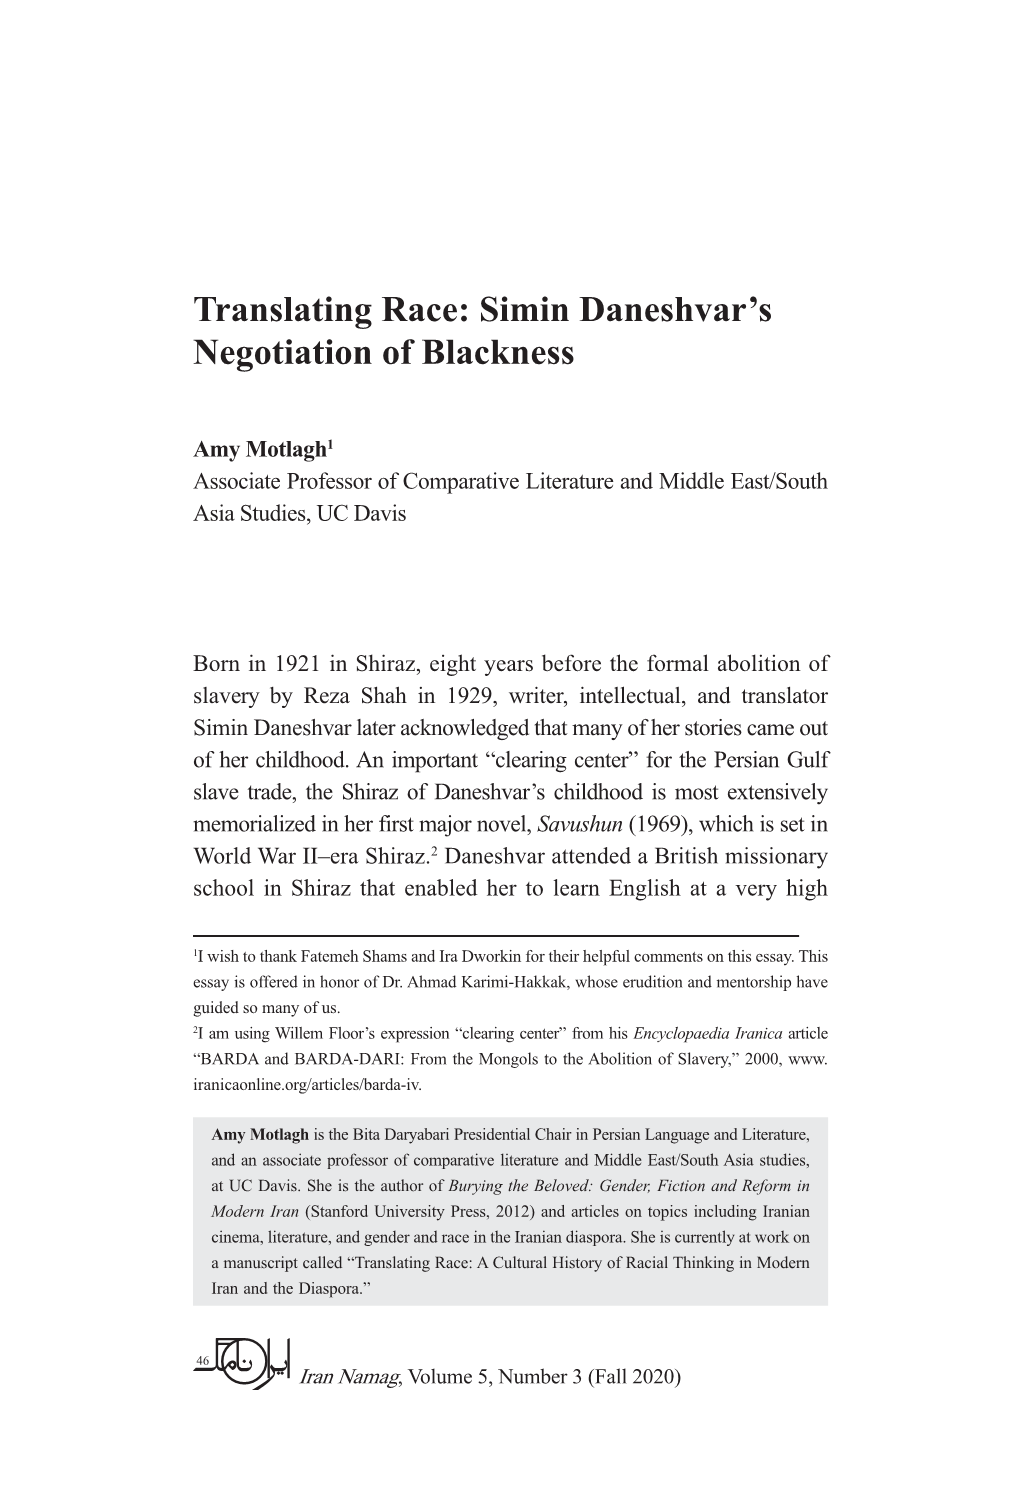 Translating Race: Simin Daneshvar's Negotiation of Blackness